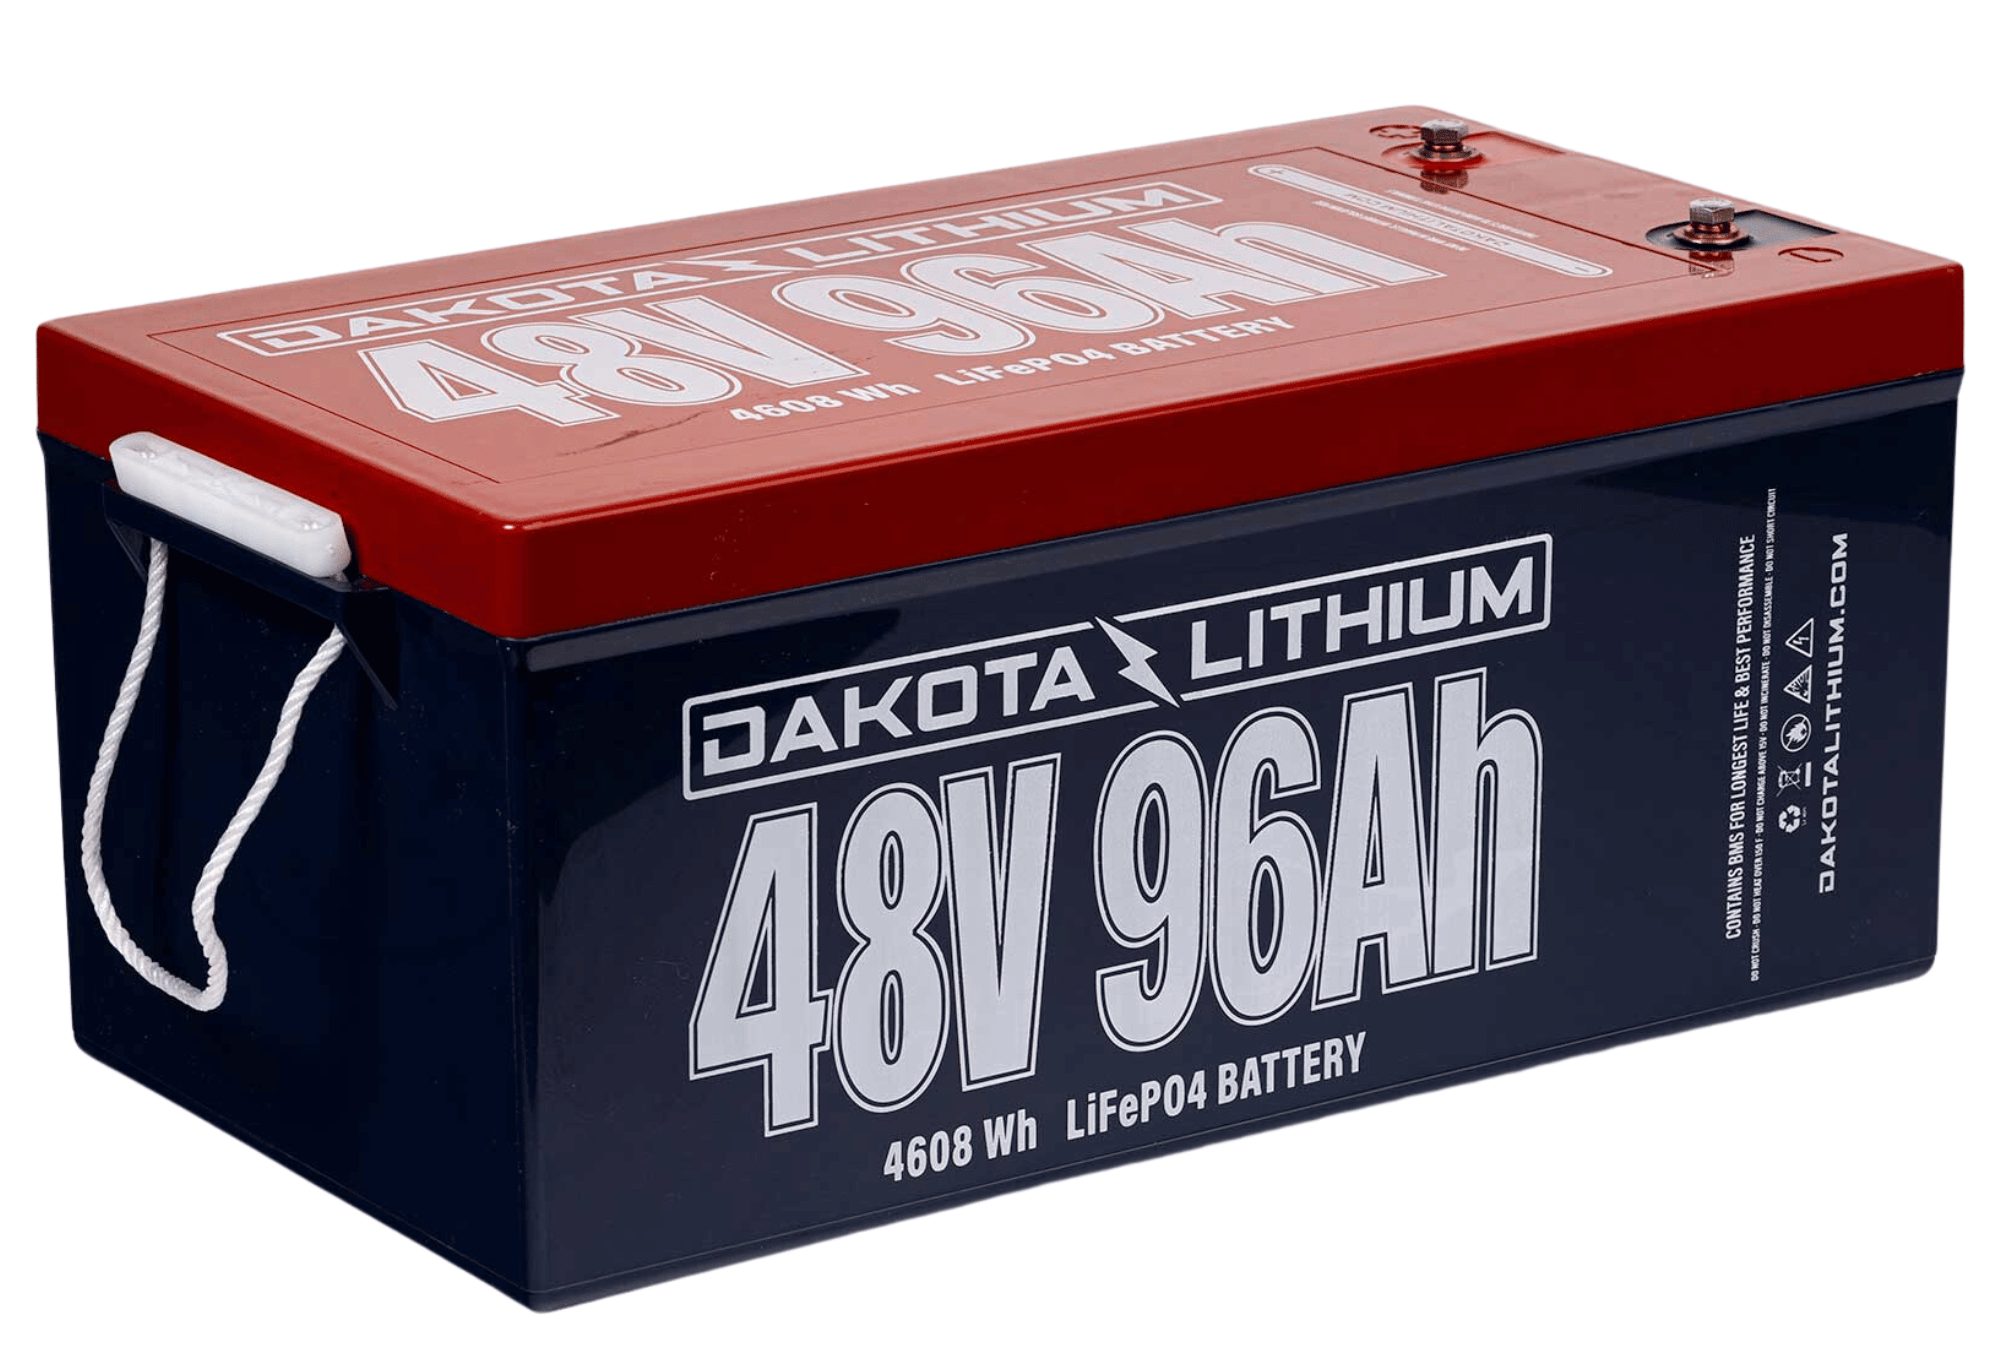 Dakota Lithium | 48V 96Ah Deep Cycle LiFePO4 Battery